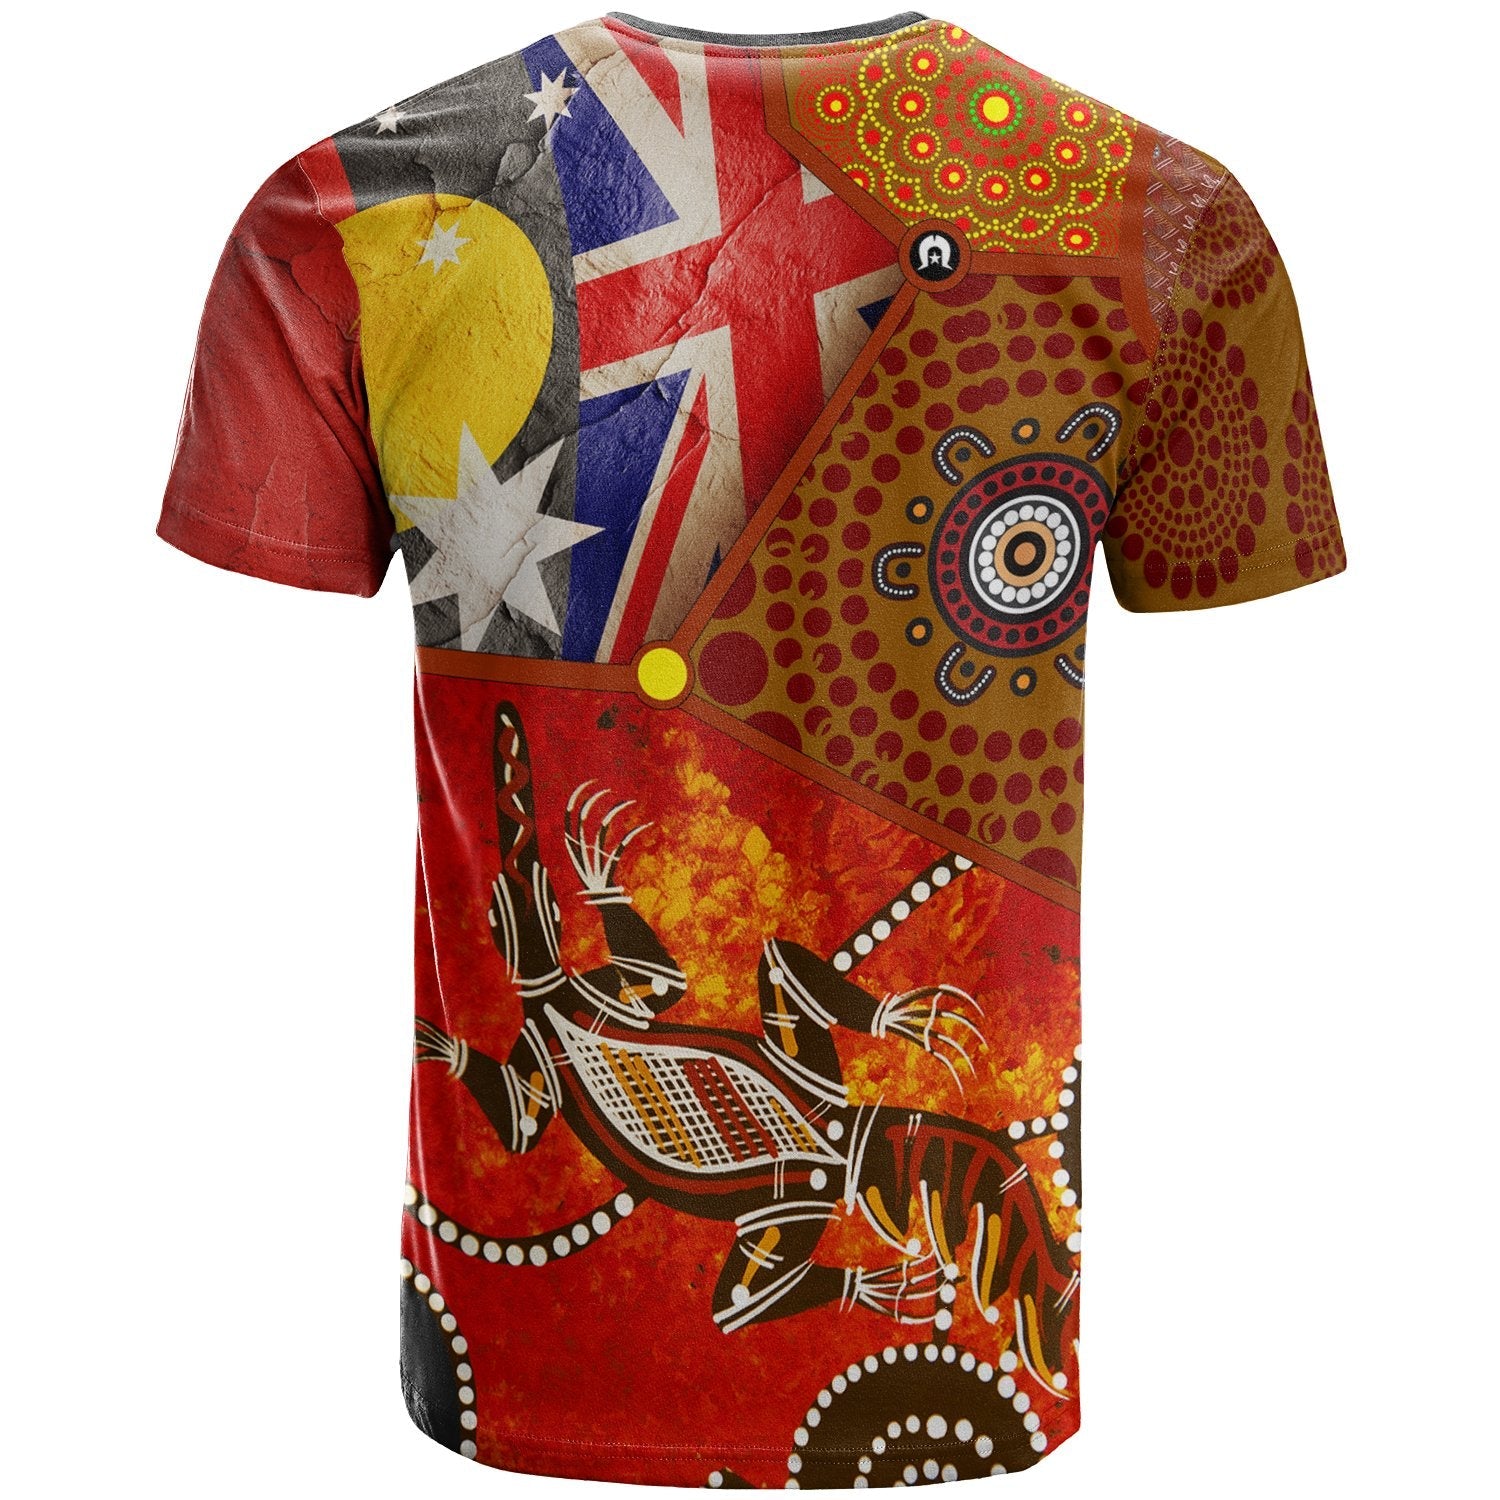 aboriginal-t-shirt-aboriginal-dot-patterns-flags-crocodile